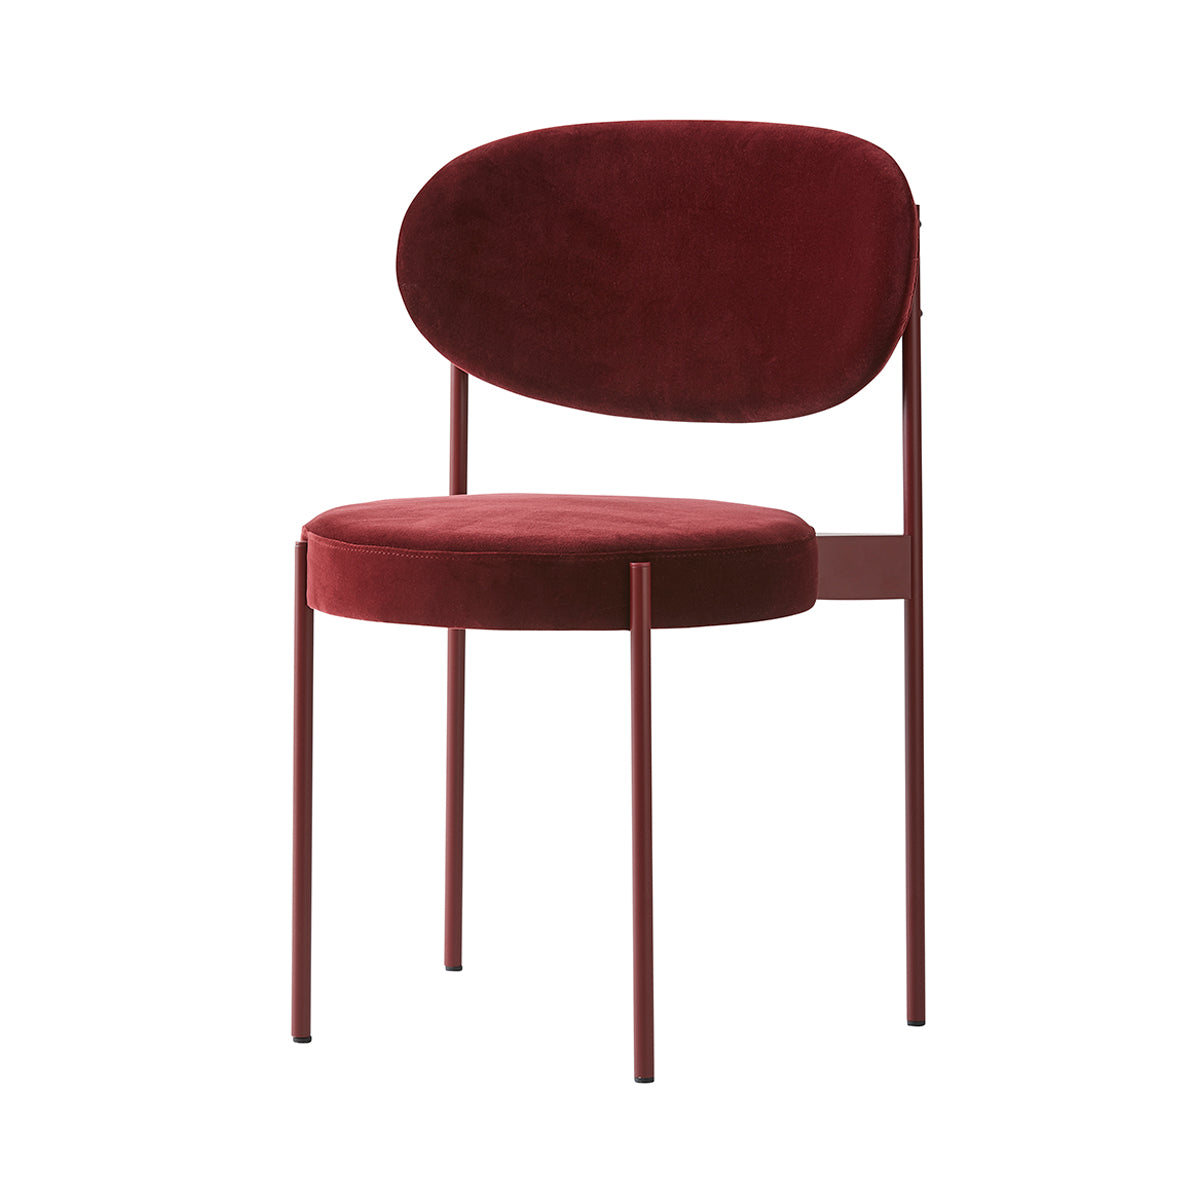 Series 430 Chair: Burgundy